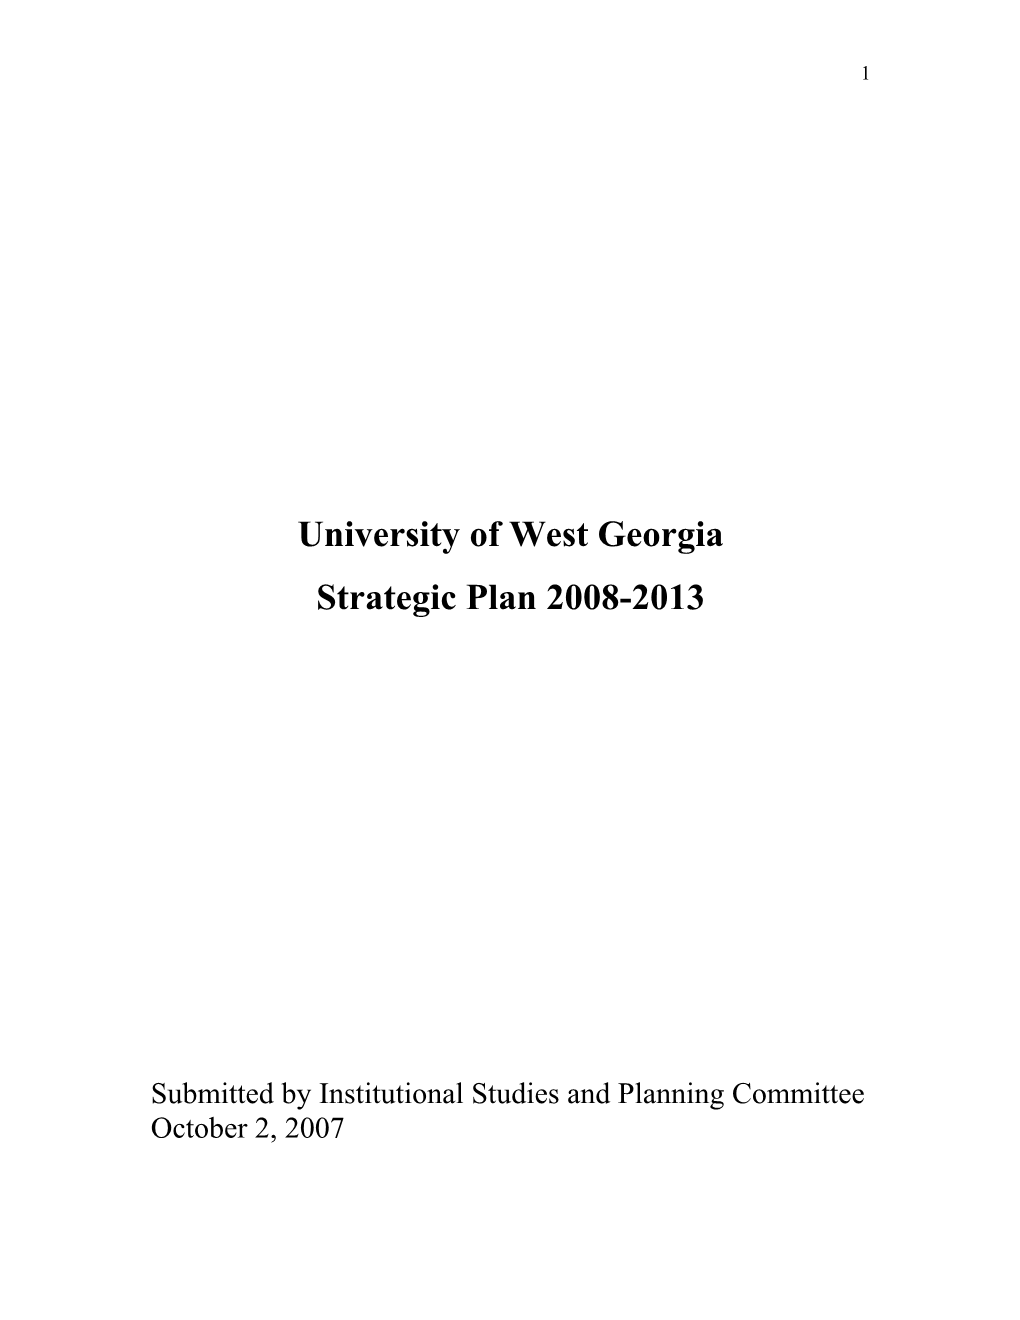 UWG Strategic Plan for 2008-2013